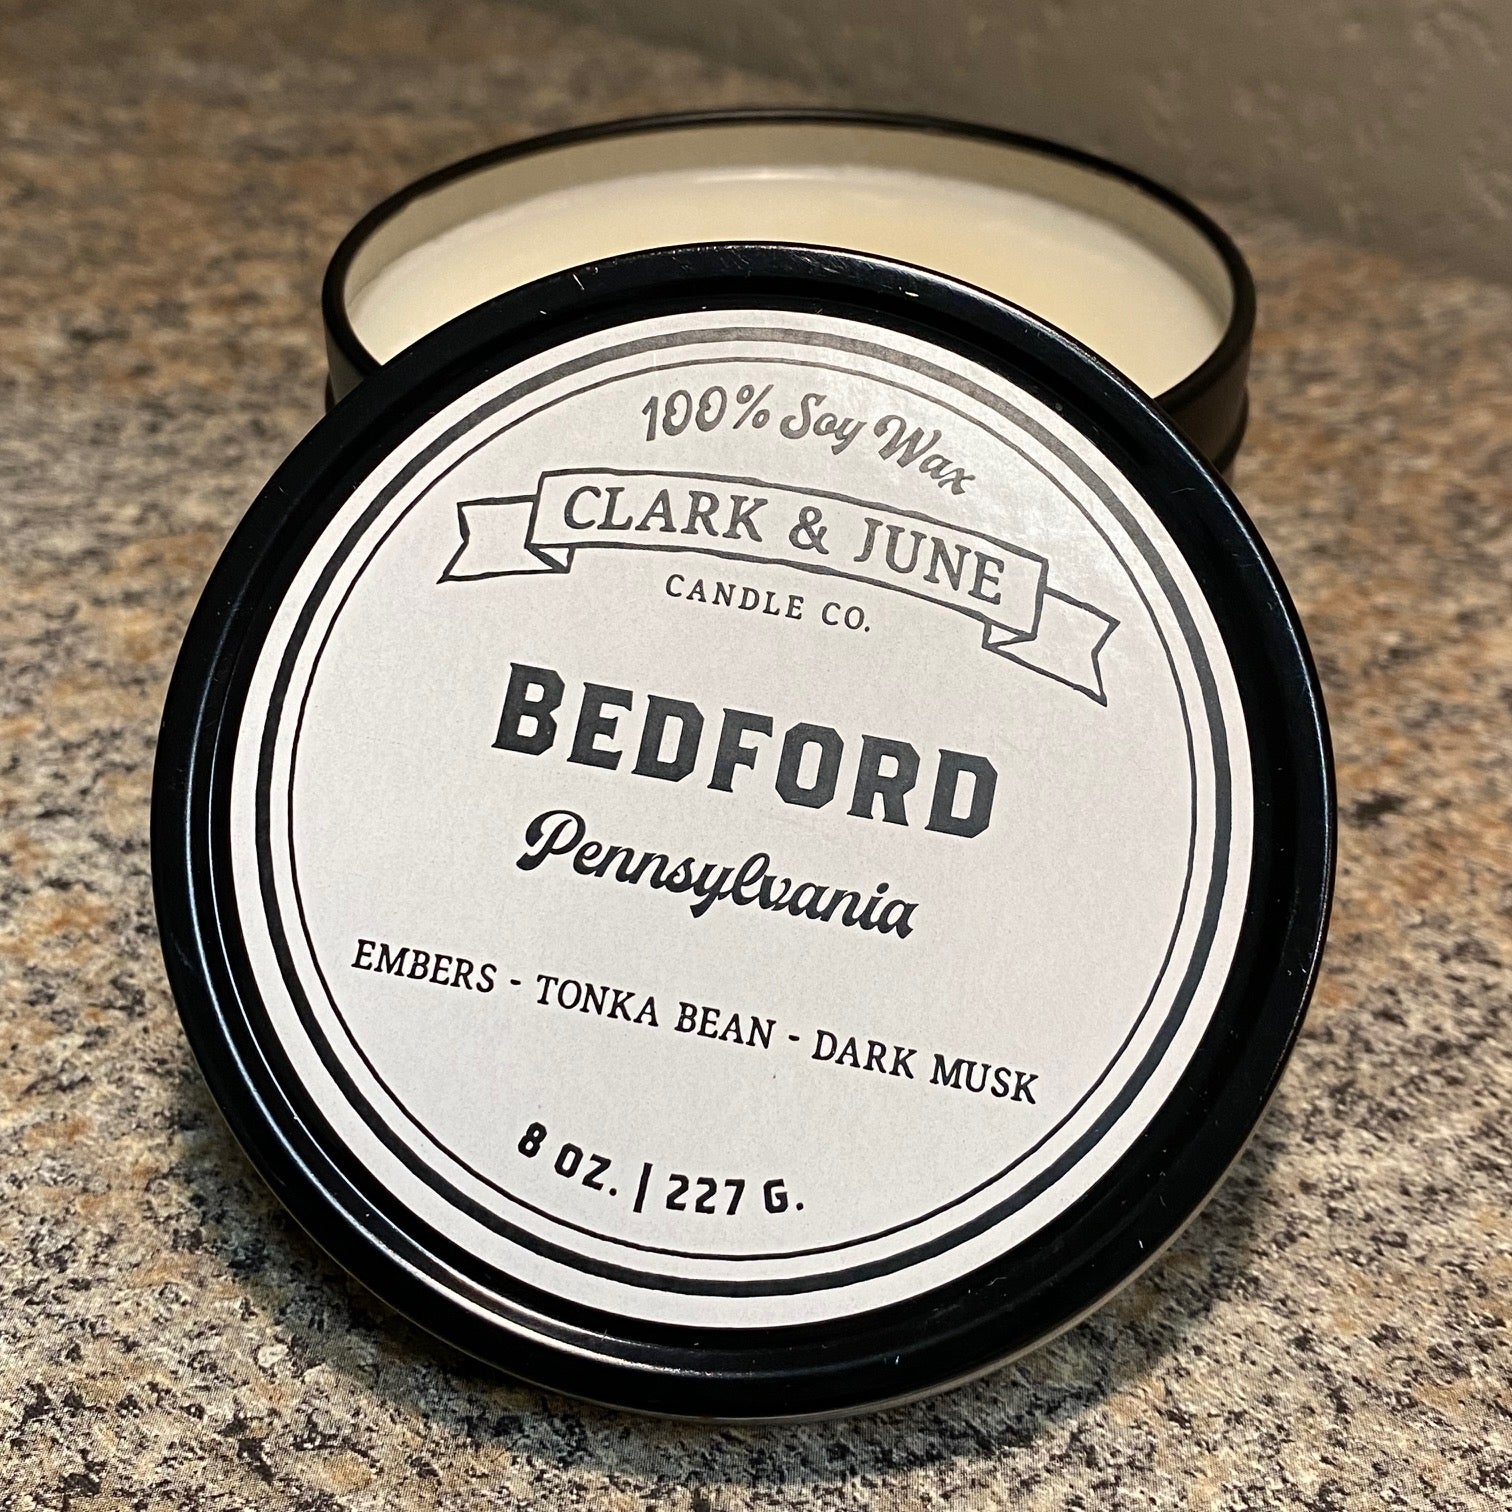 Clark & June "Bedford" Tin Candles